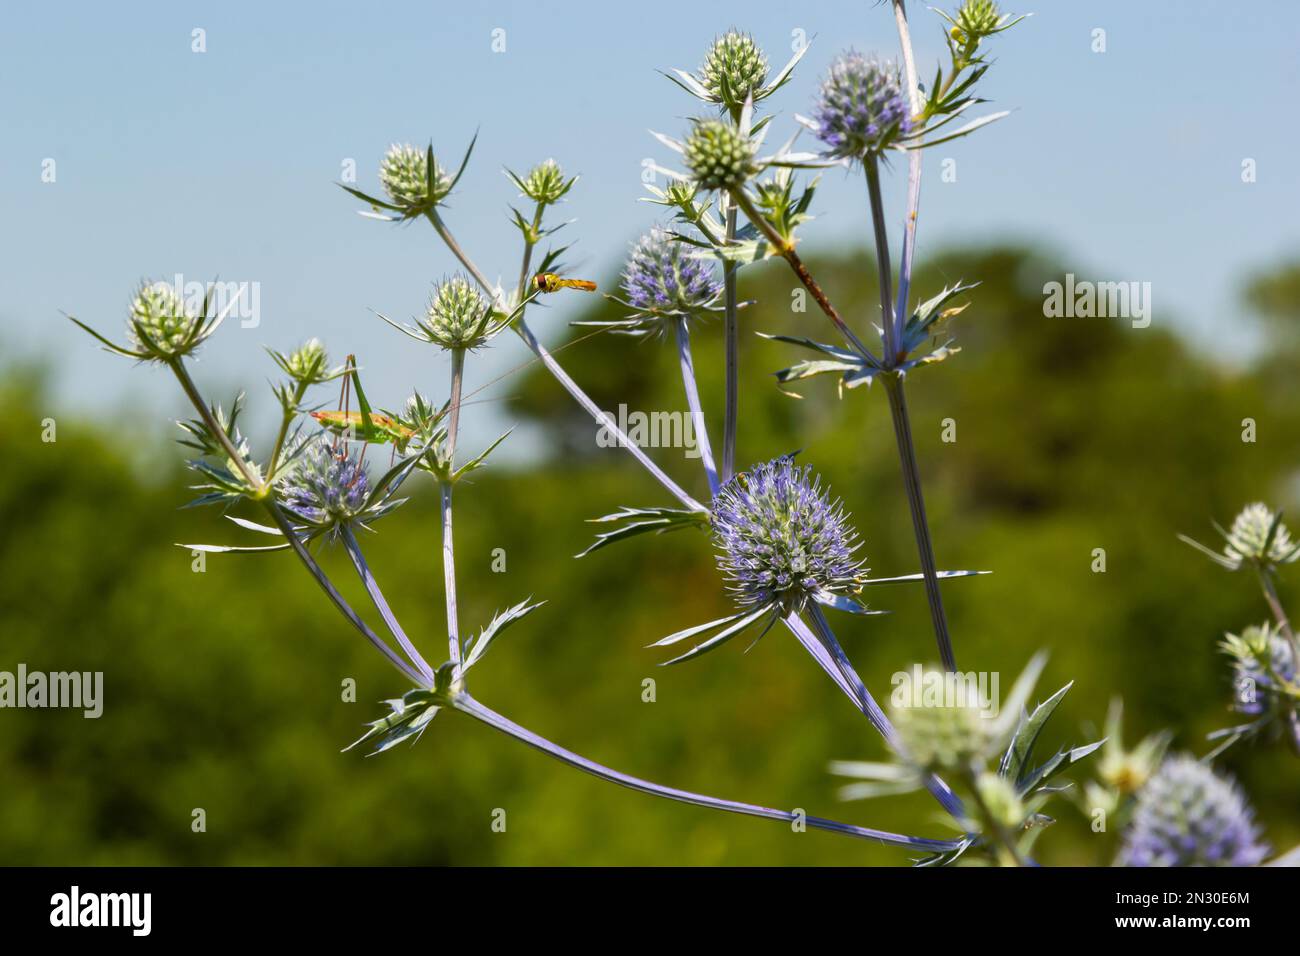 Eryngium Planum Or Blue Sea Holly - Flower Growing On Meadow. Wild Herb Plants. Stock Photo